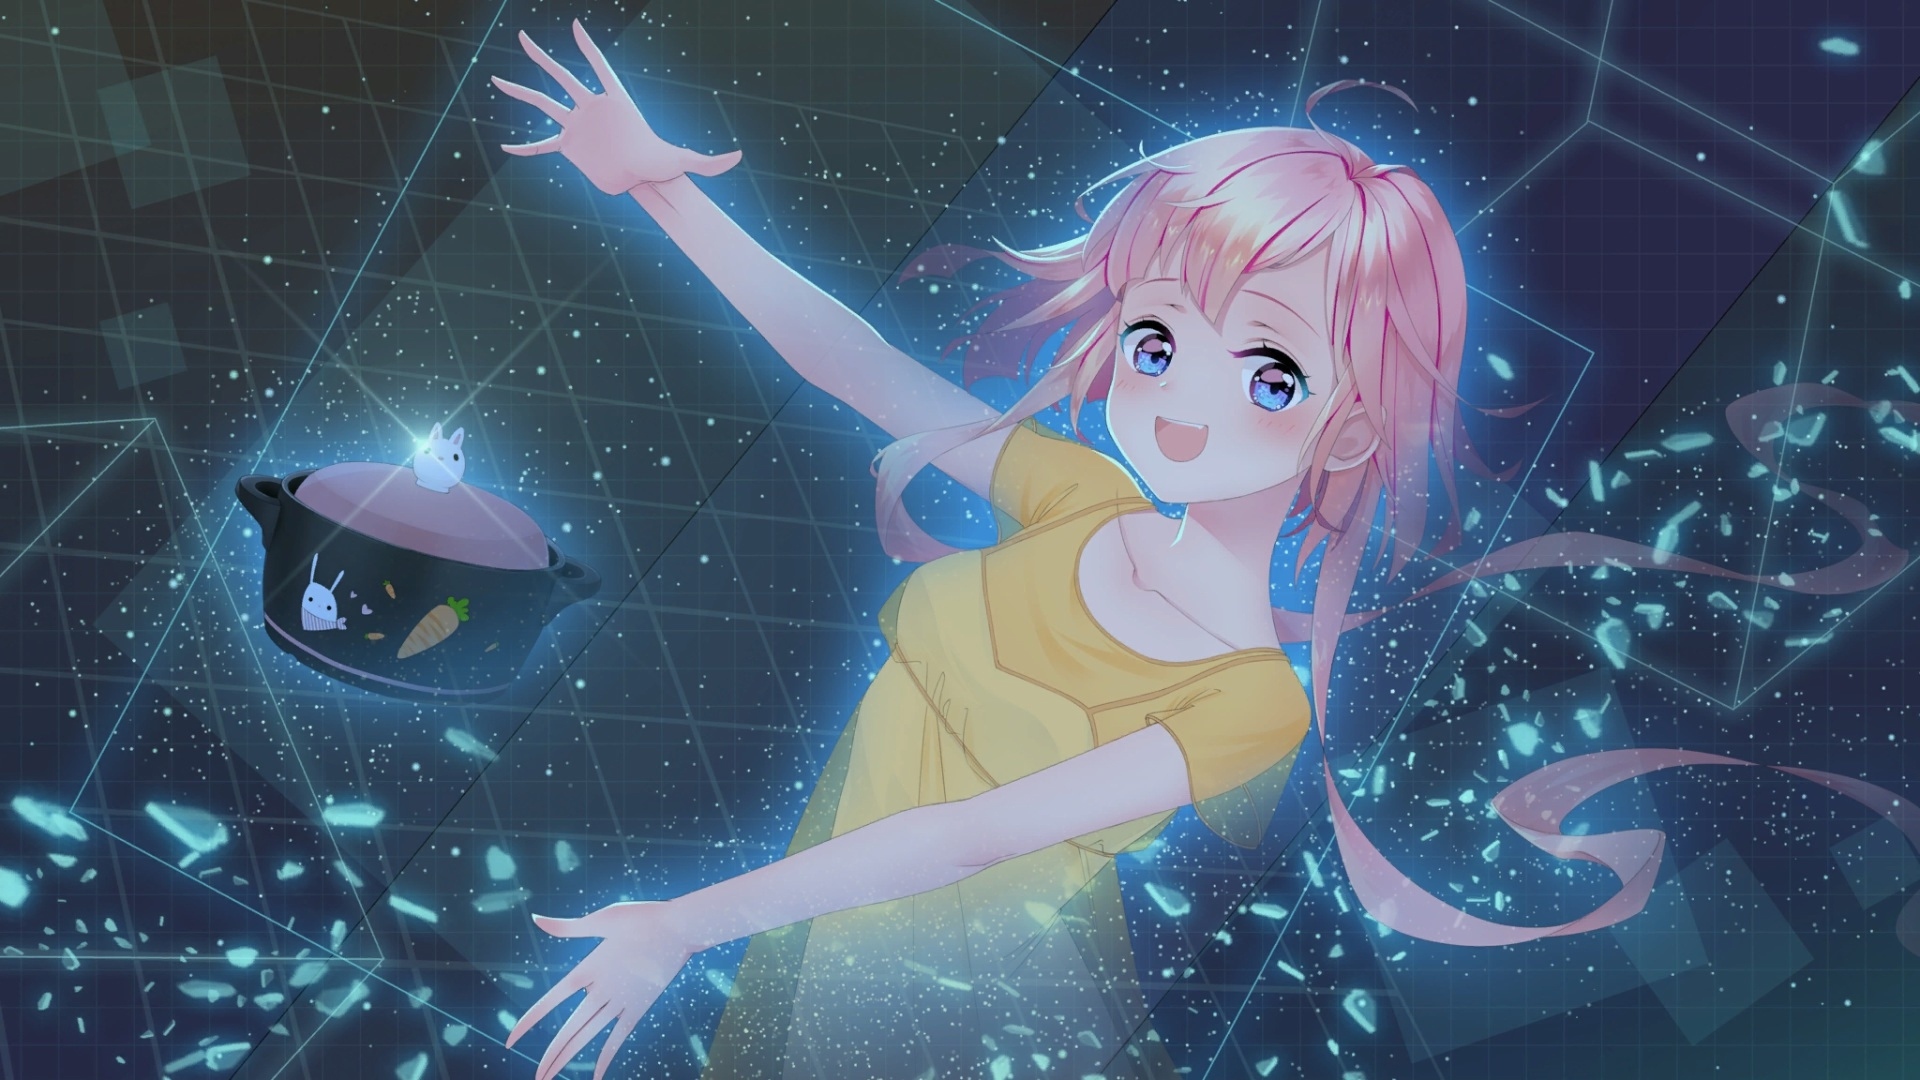 Beautiful anime girl with pink hair